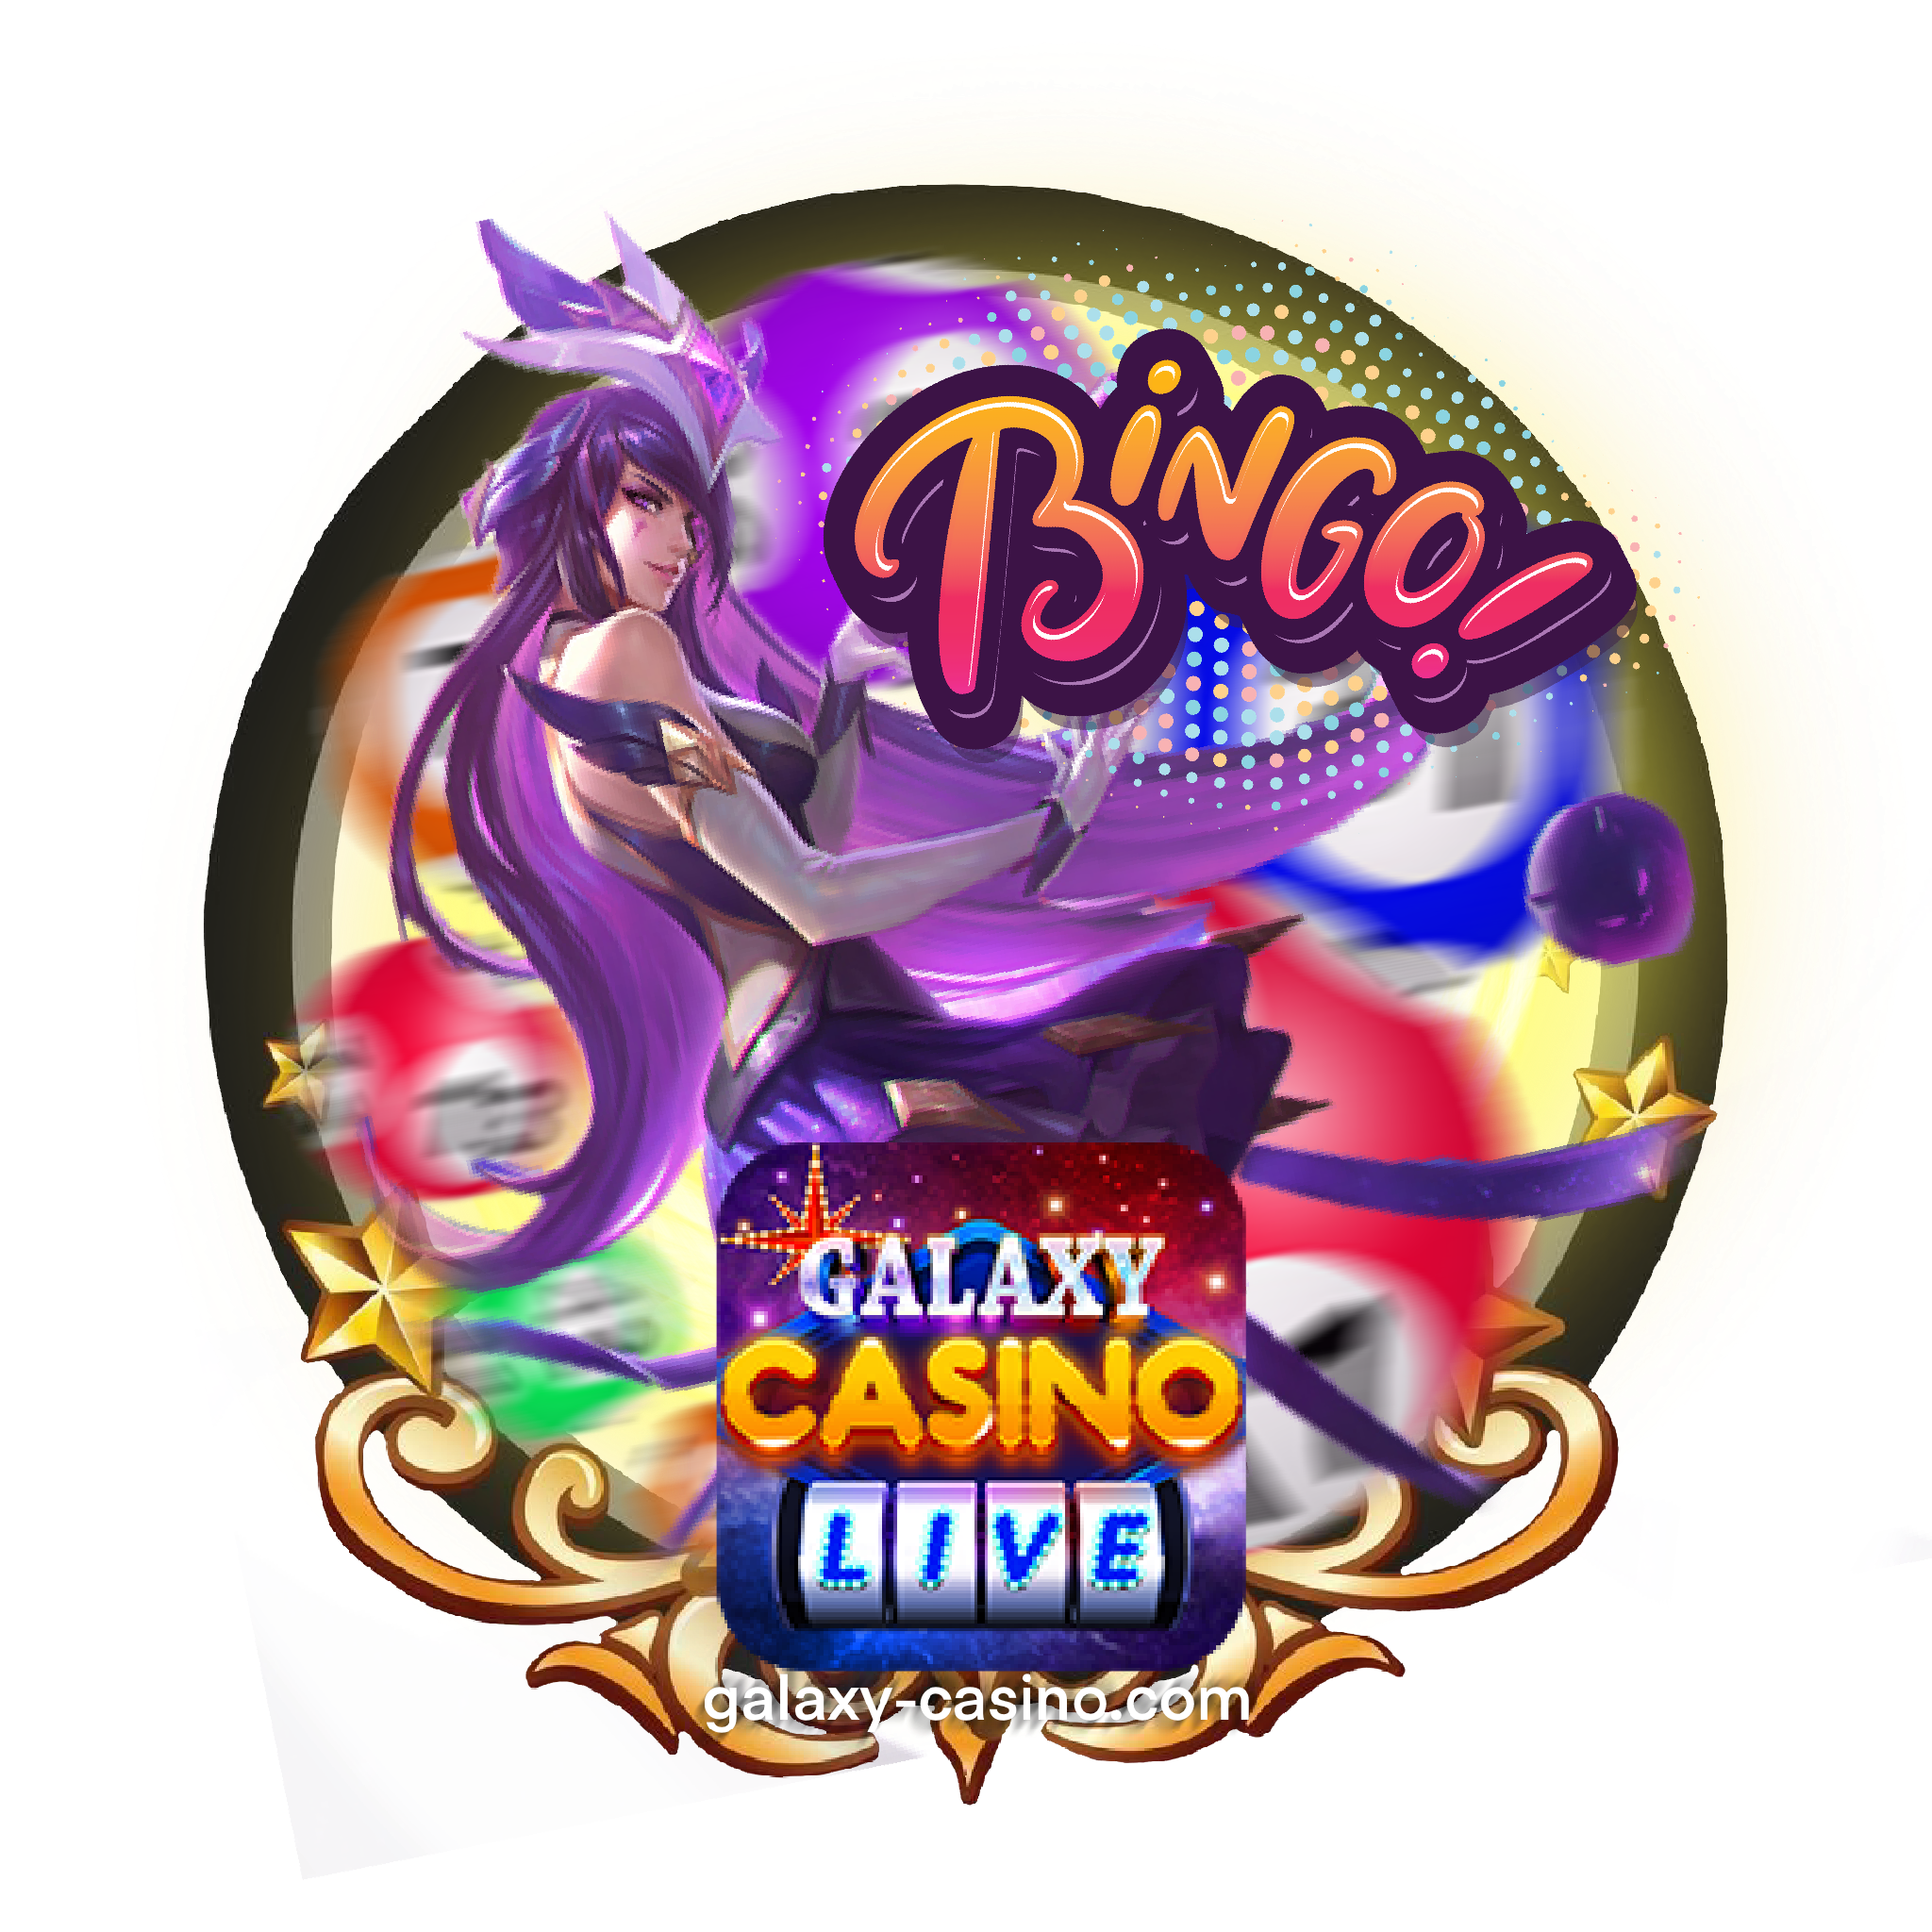 Galaxy Casino bingo